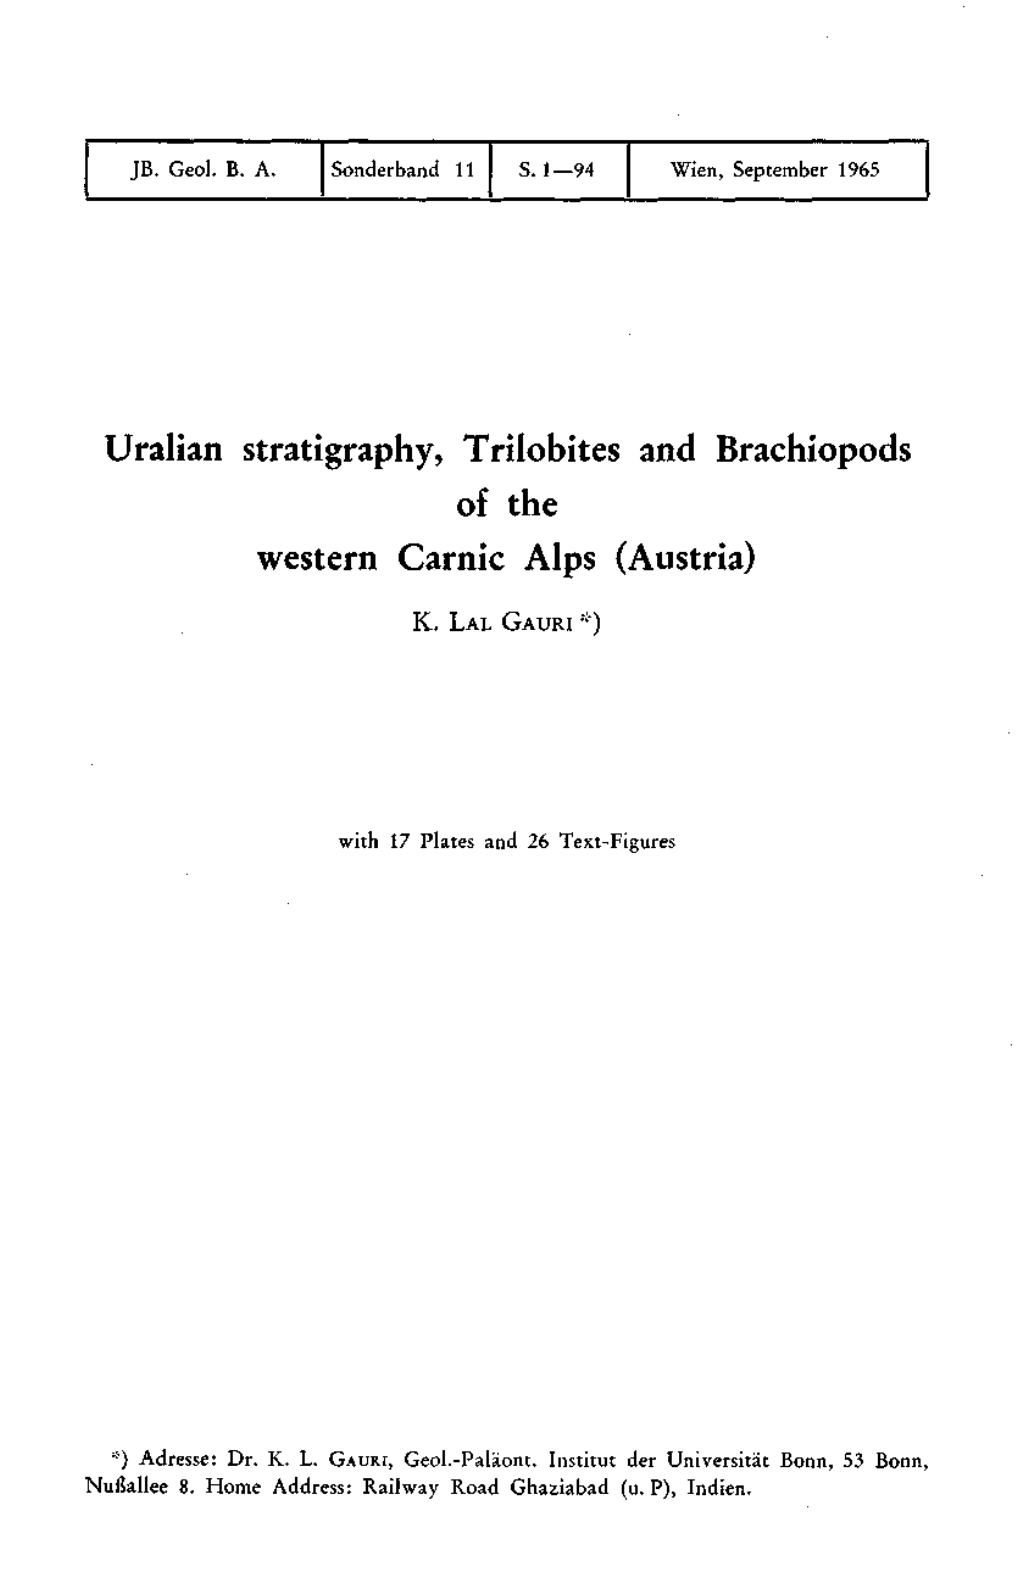 Uralian Stratigraphy, Trilobites and Brachiopods of the Western Carnic Alps (Austria)